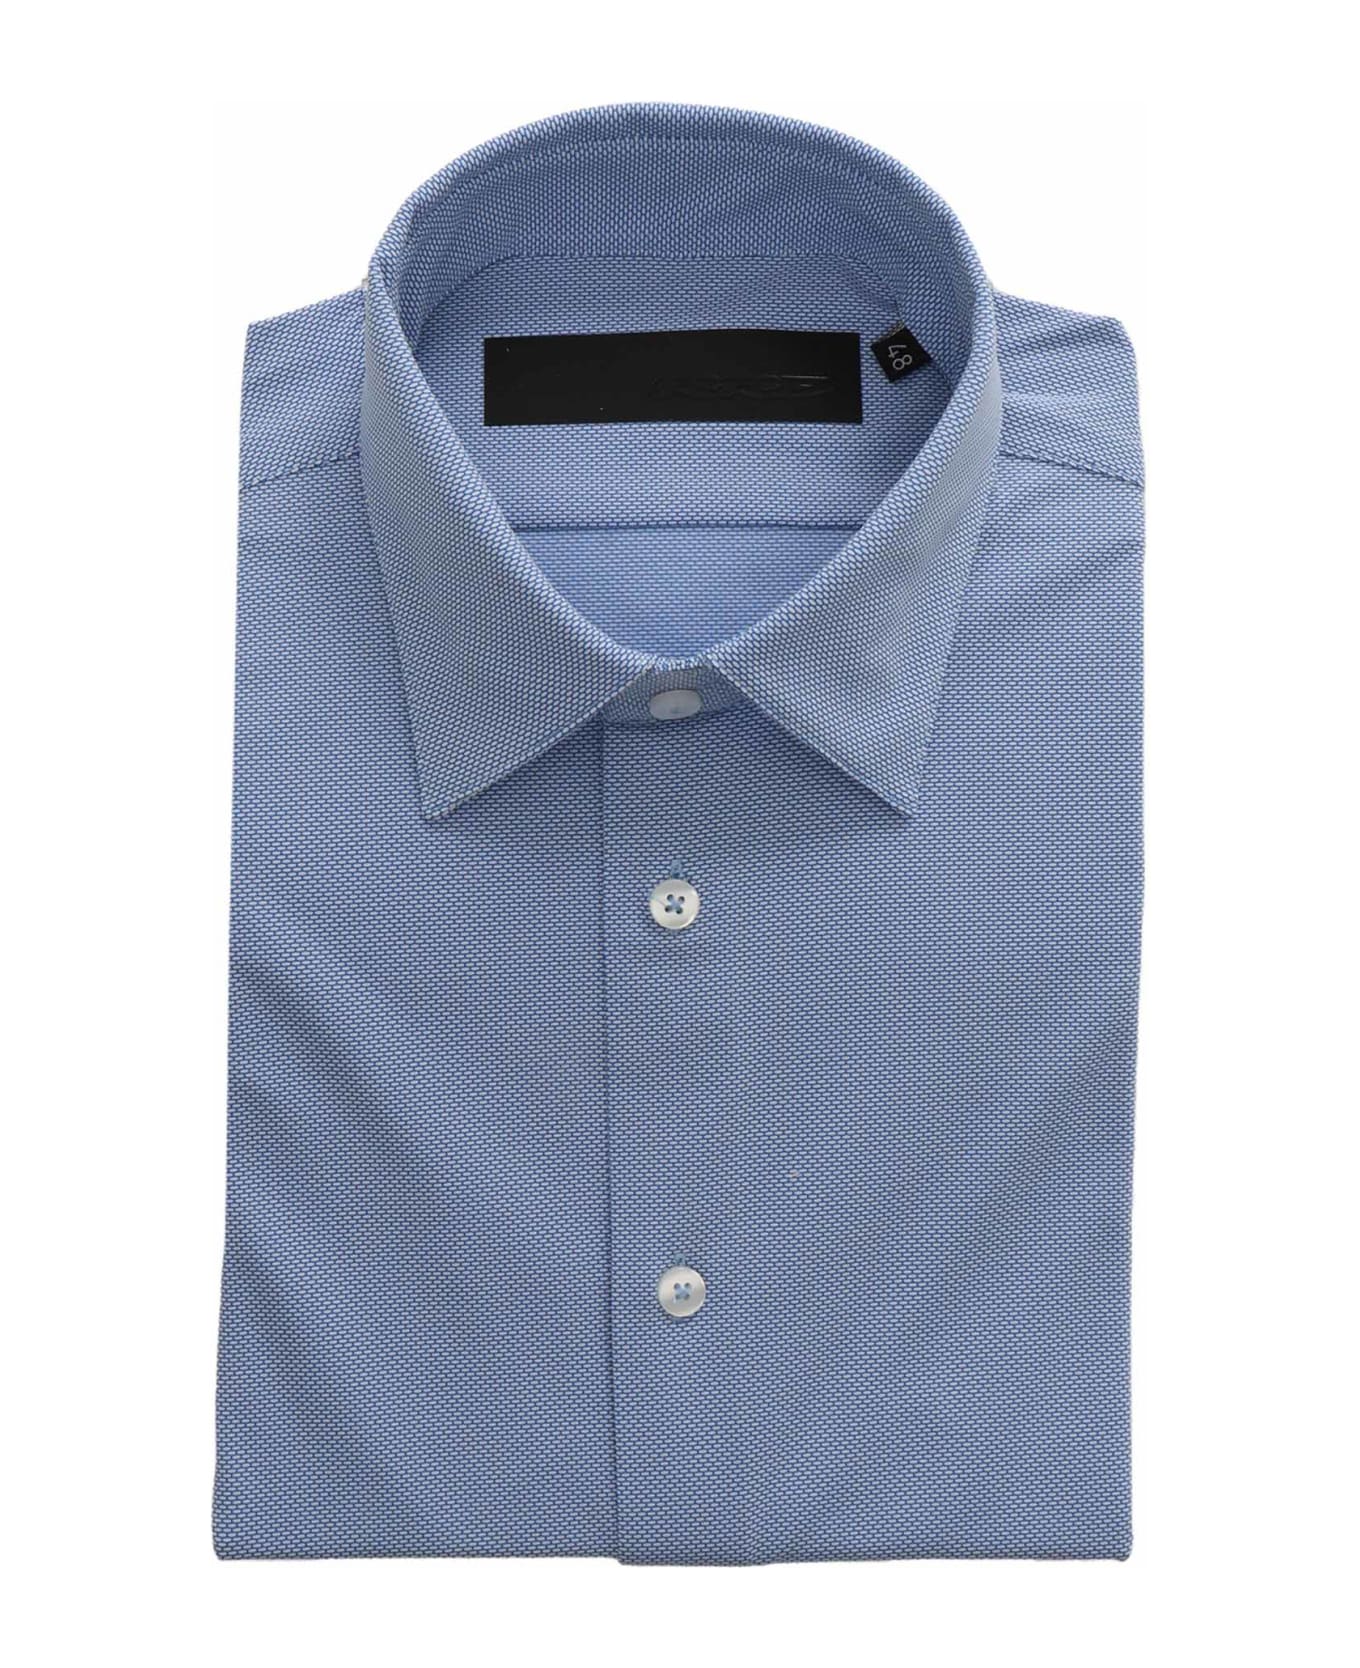 RRD - Roberto Ricci Design Jacquard Oxford Shirt - LIGHT BLUE